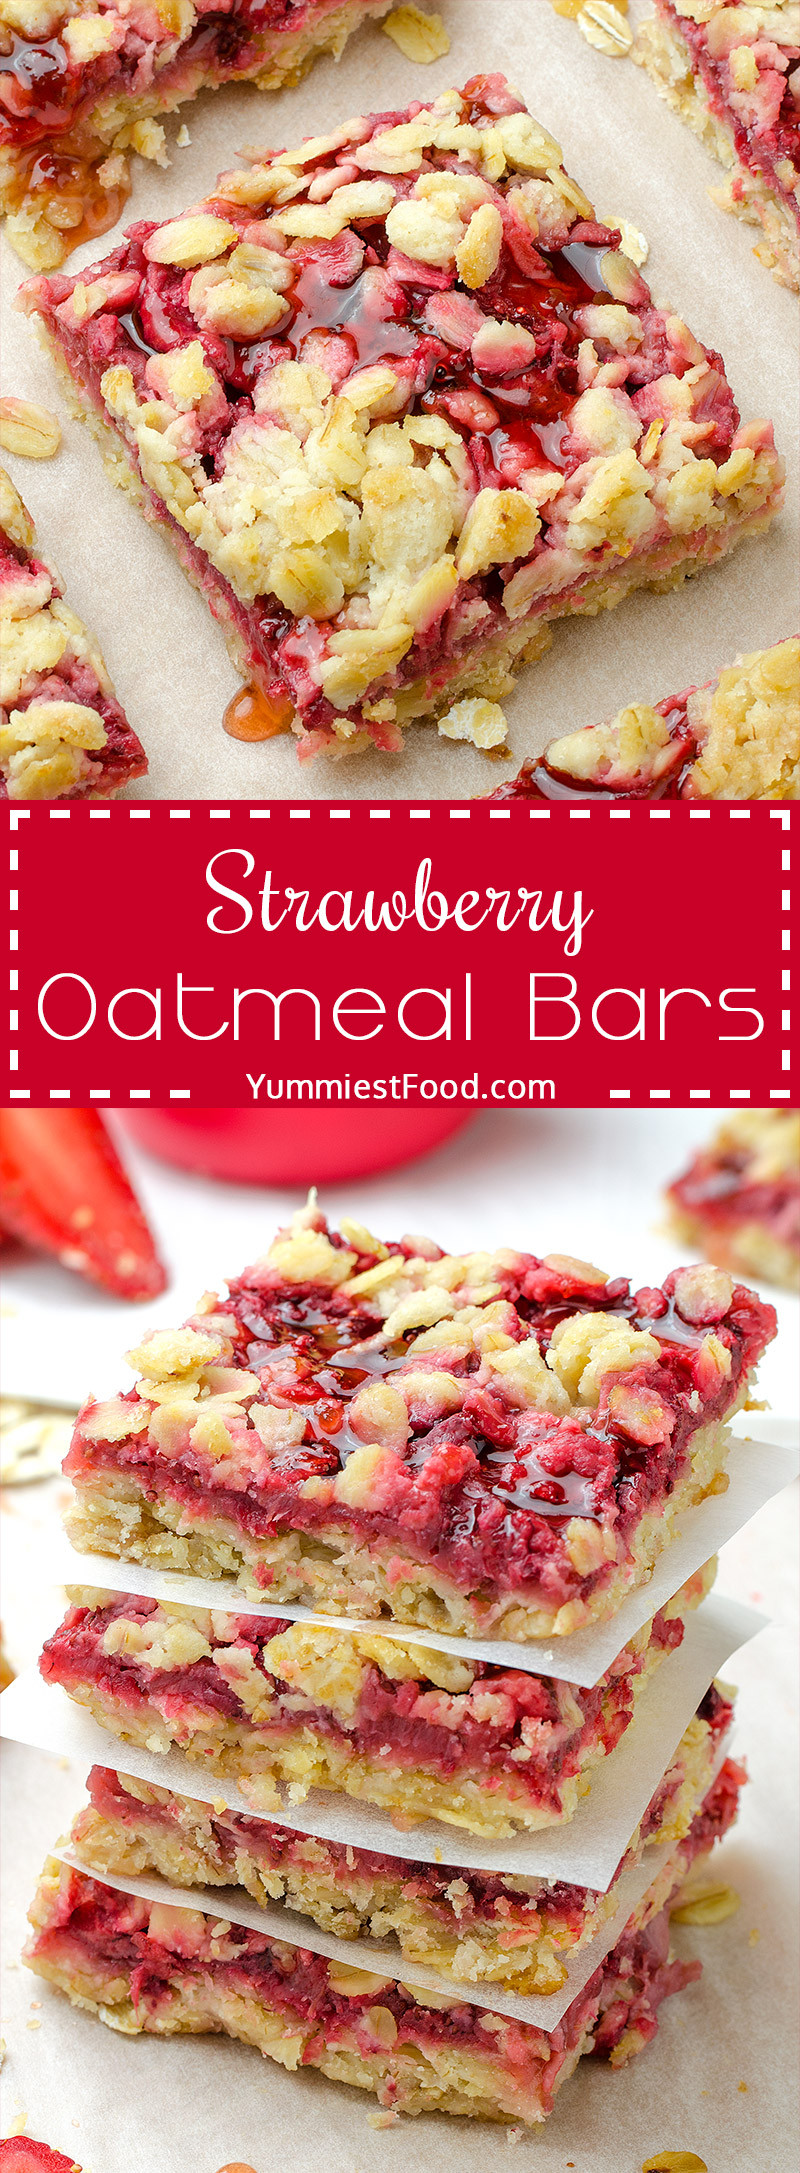 Healthy Breakfast Bars Recipe
 Healthy Breakfast Strawberry Oatmeal Bars Recipe from